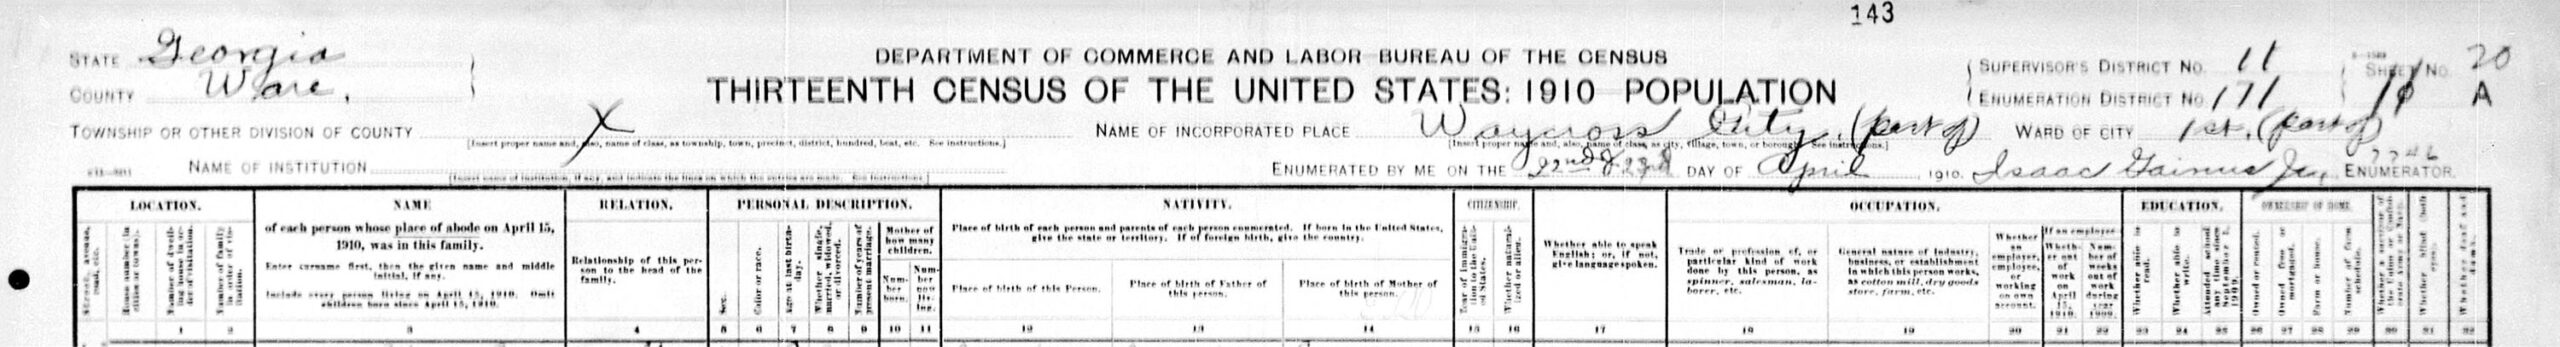 Thirteenth Census of the United States, 1910 Population